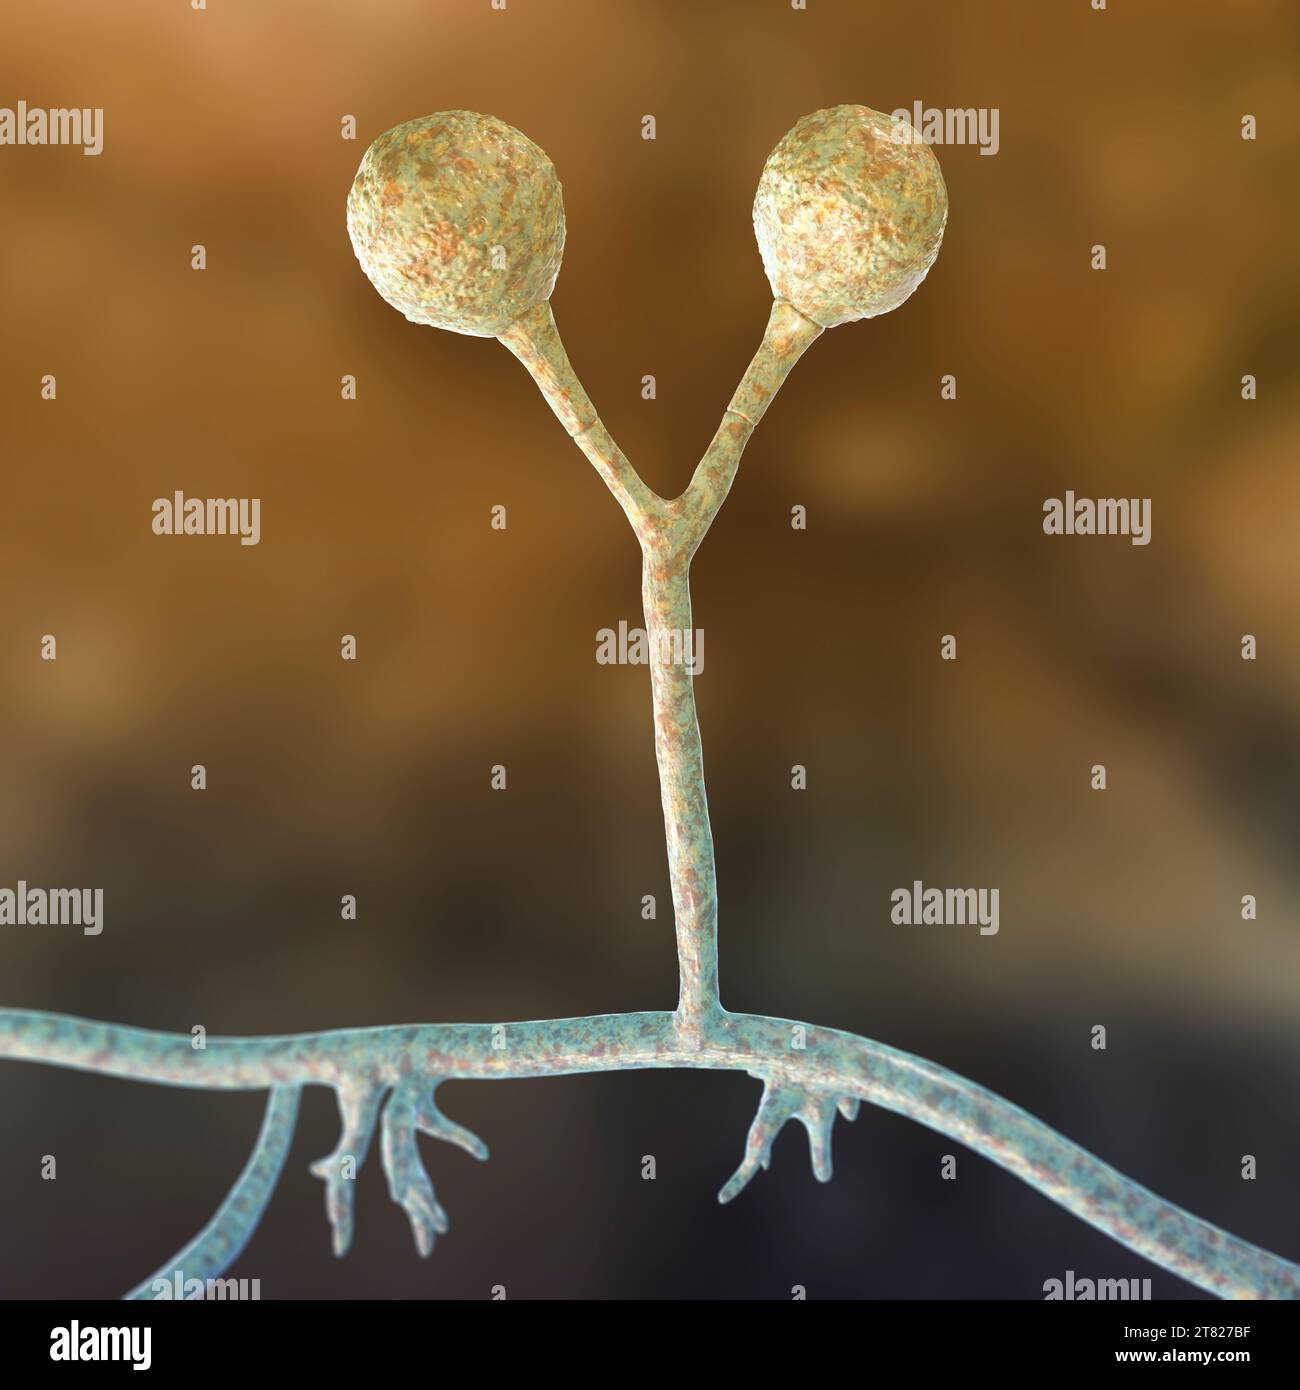 Rhizomucor fungi, illustration Stock Photo